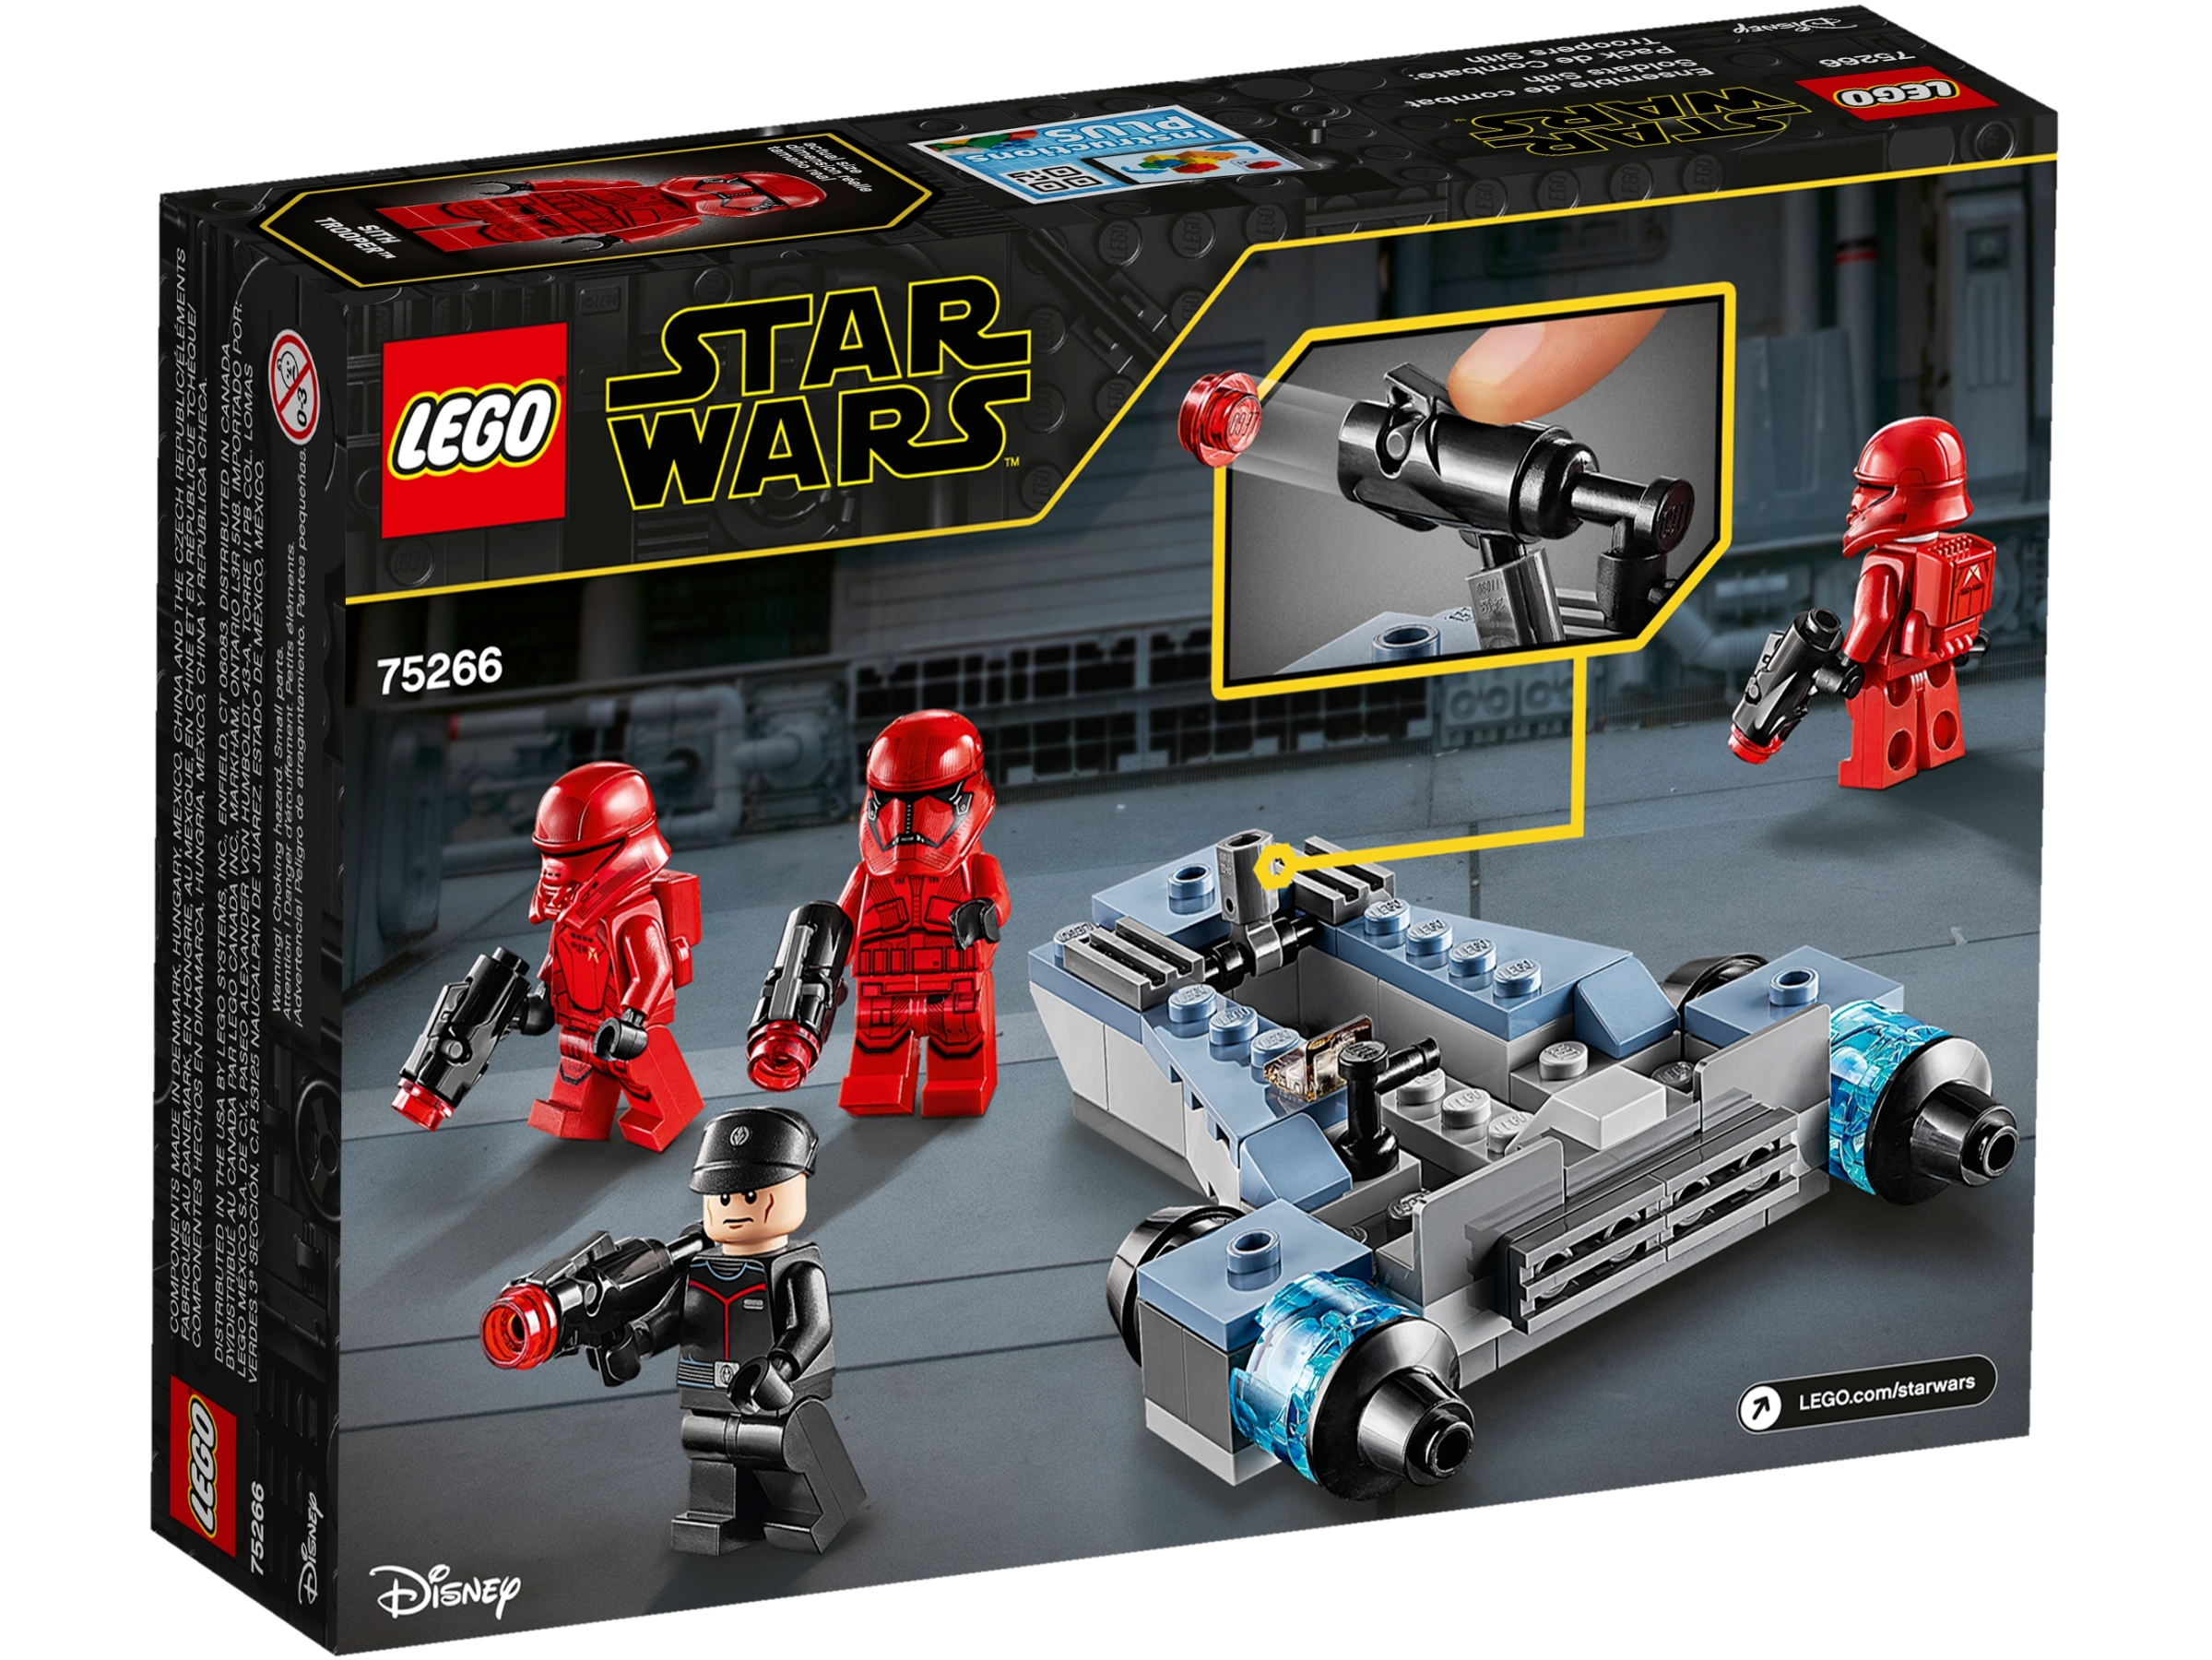 LEGO Star Wars 912174 Polybag Sith Trooper ™